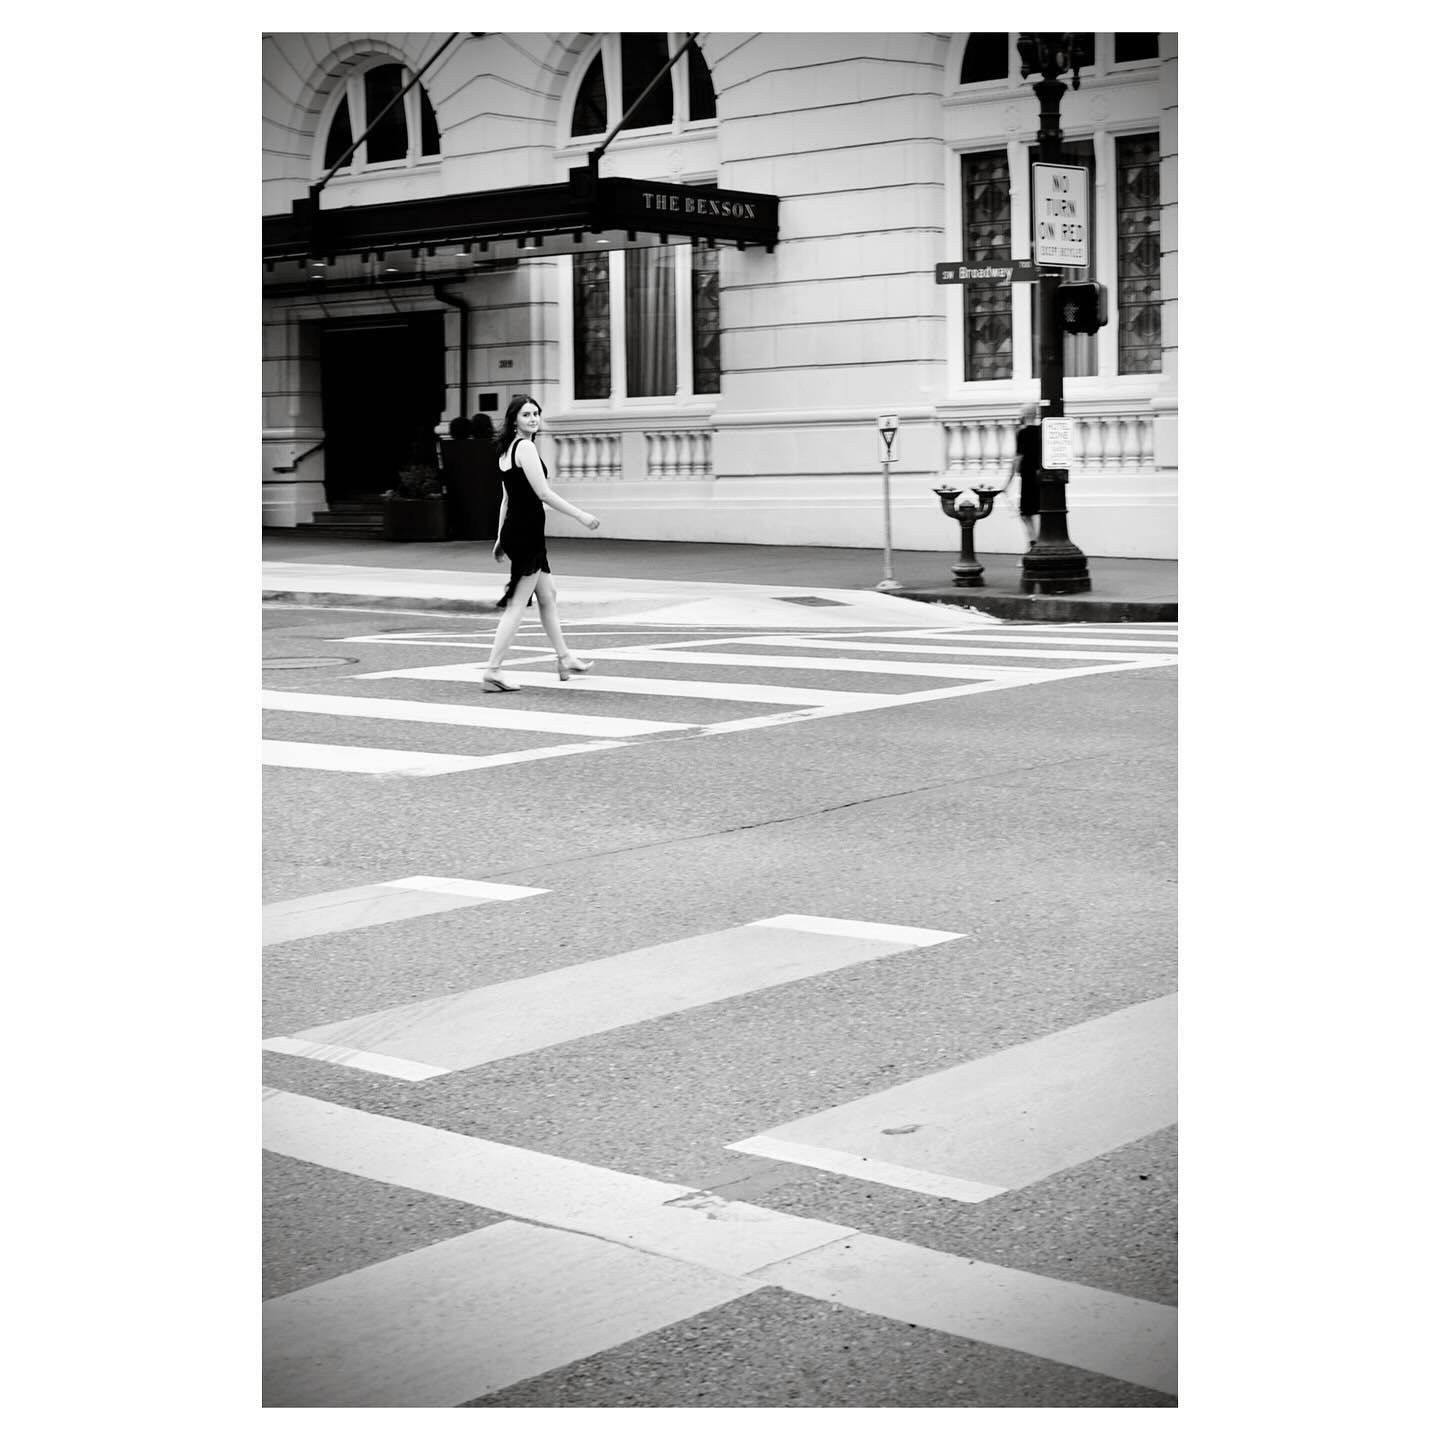 Runway vibes in Portland&hellip; Part 1
.
.
.
#downtown #portland #oregon #portlandoregon #portlandphotographer #portraitphotography #streetphotography #editorial #photographer #photooftheday #photoshoot #insta #instagood #instaphoto #instafashion #f